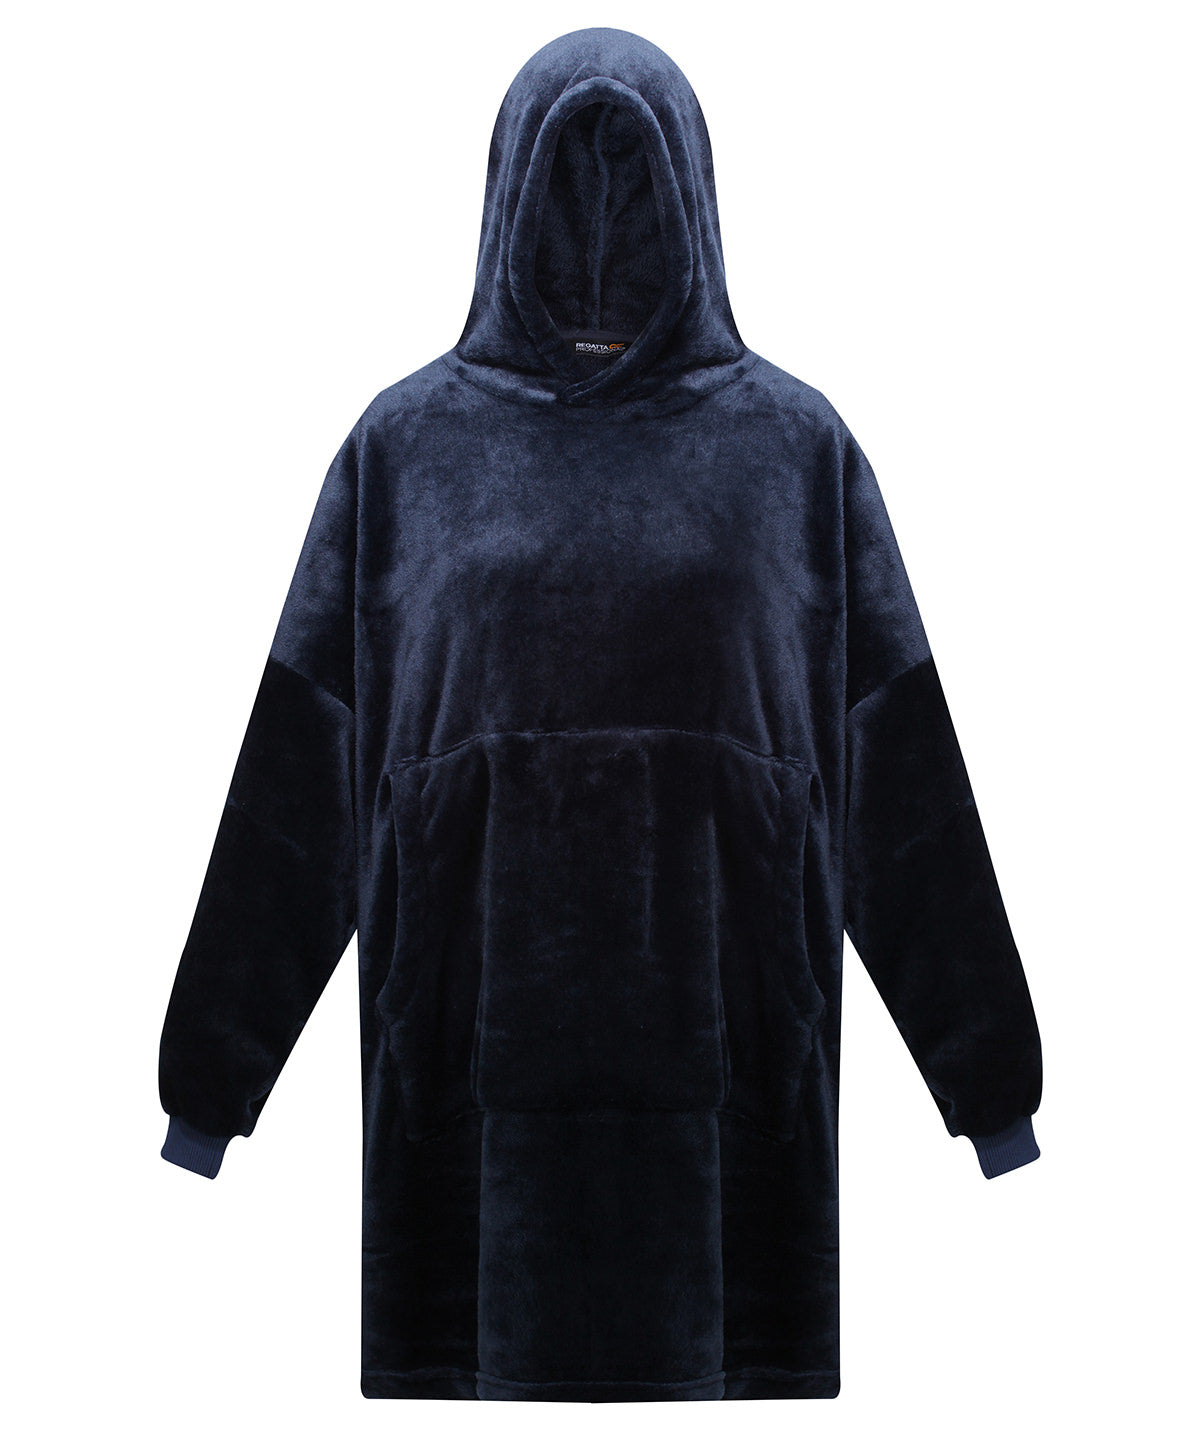 Regatta Snuggler oversized fleece hoodie